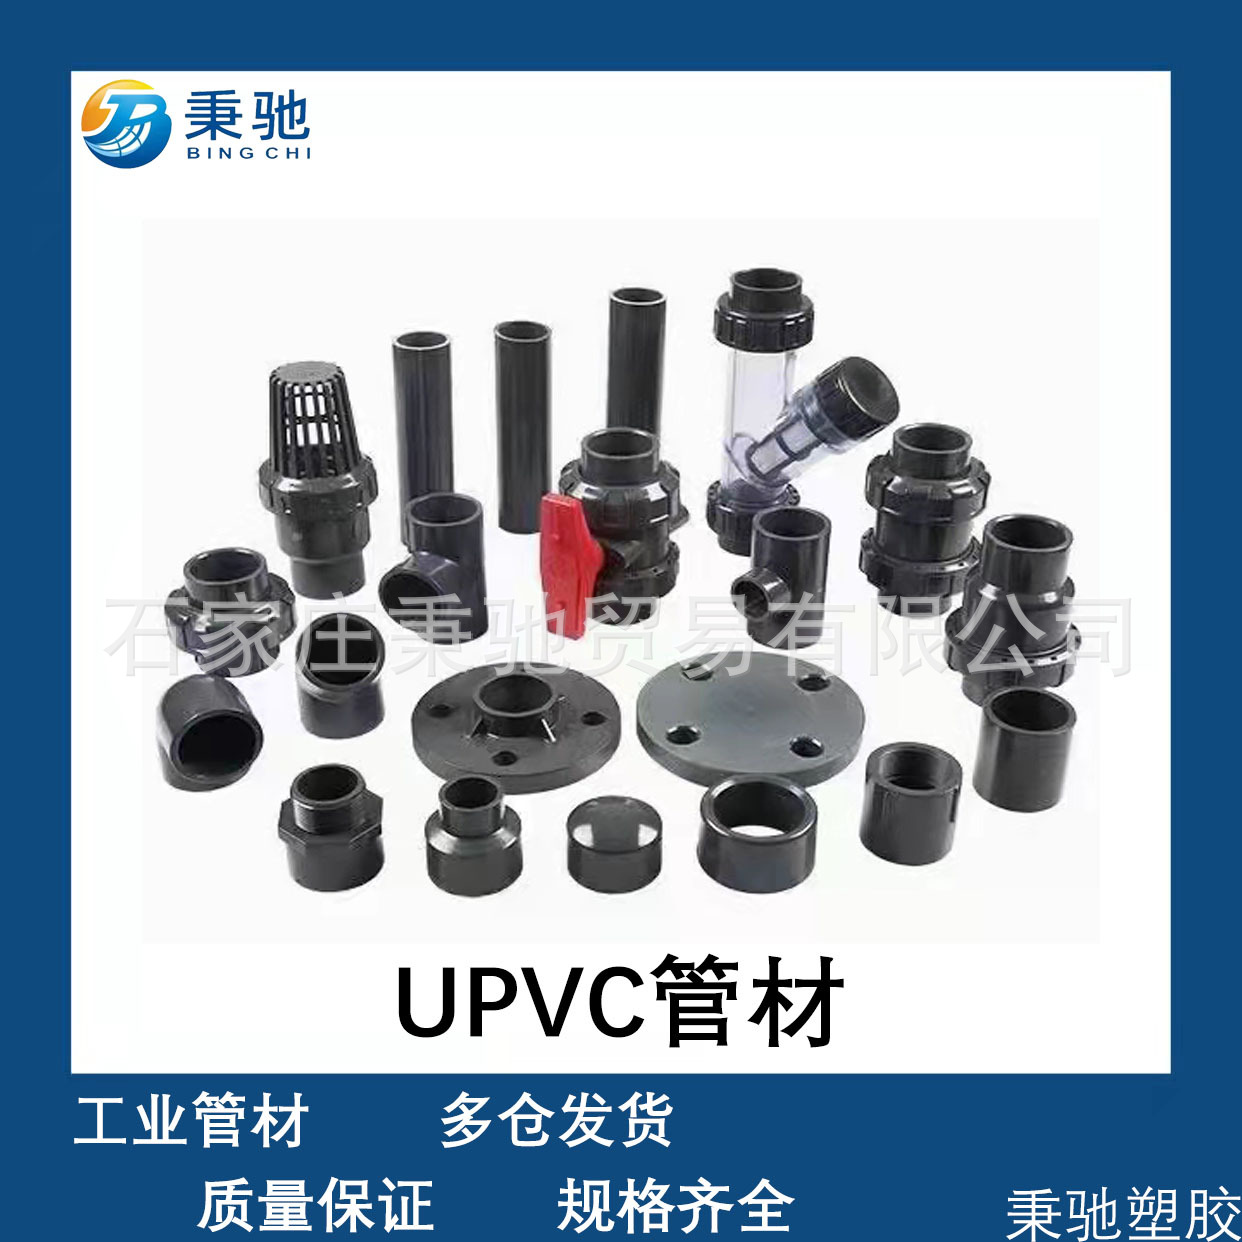 UPVC工业给排水污水处理 管件双油任球阀Y型过滤器止回阀活结弯头